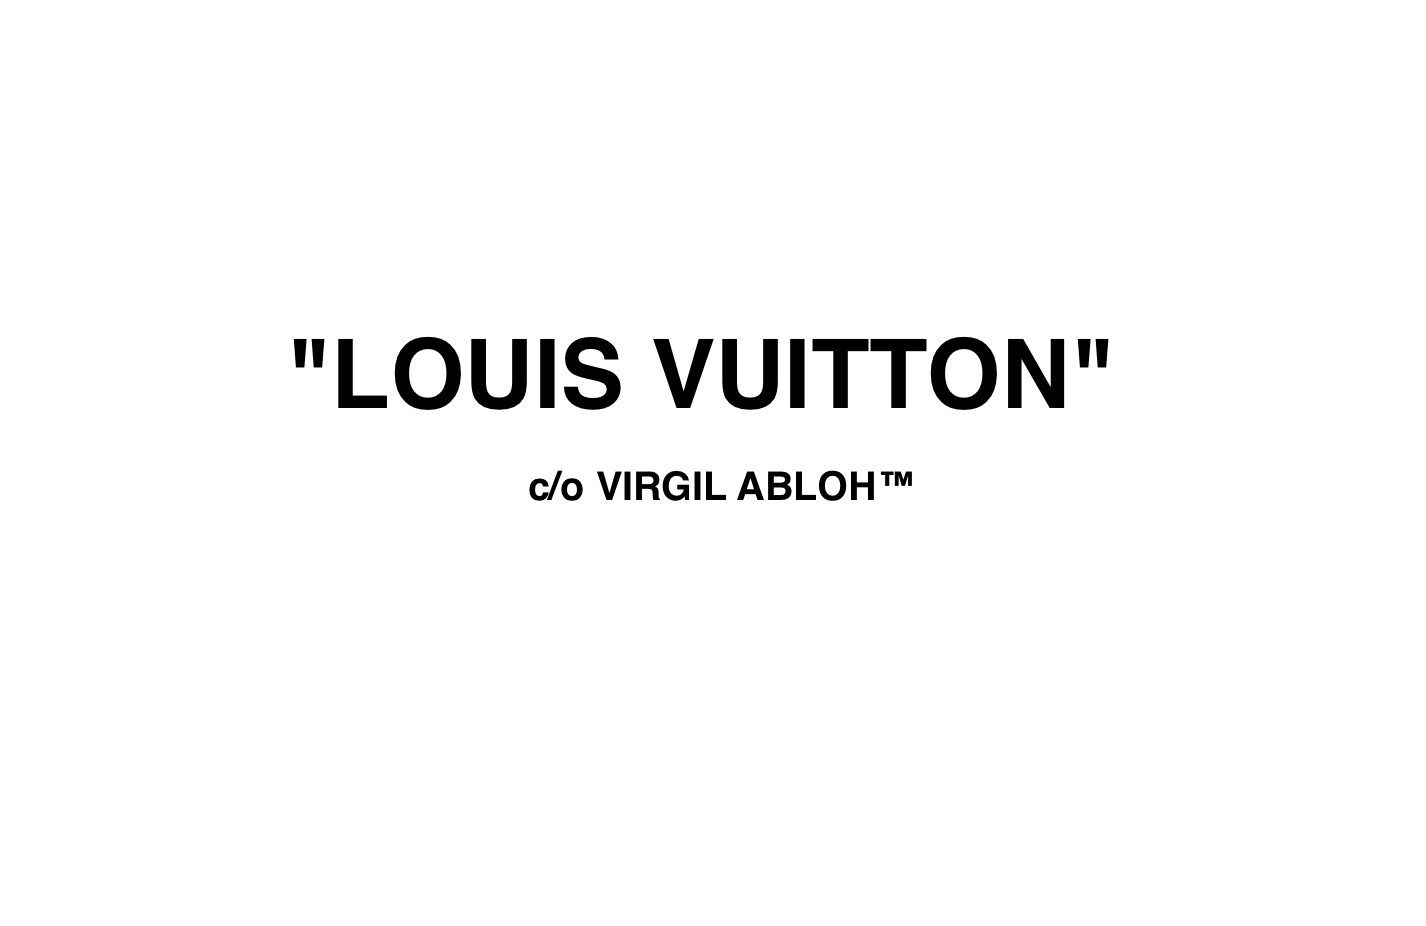 Louis Vuitton c/o Virgil Abloh